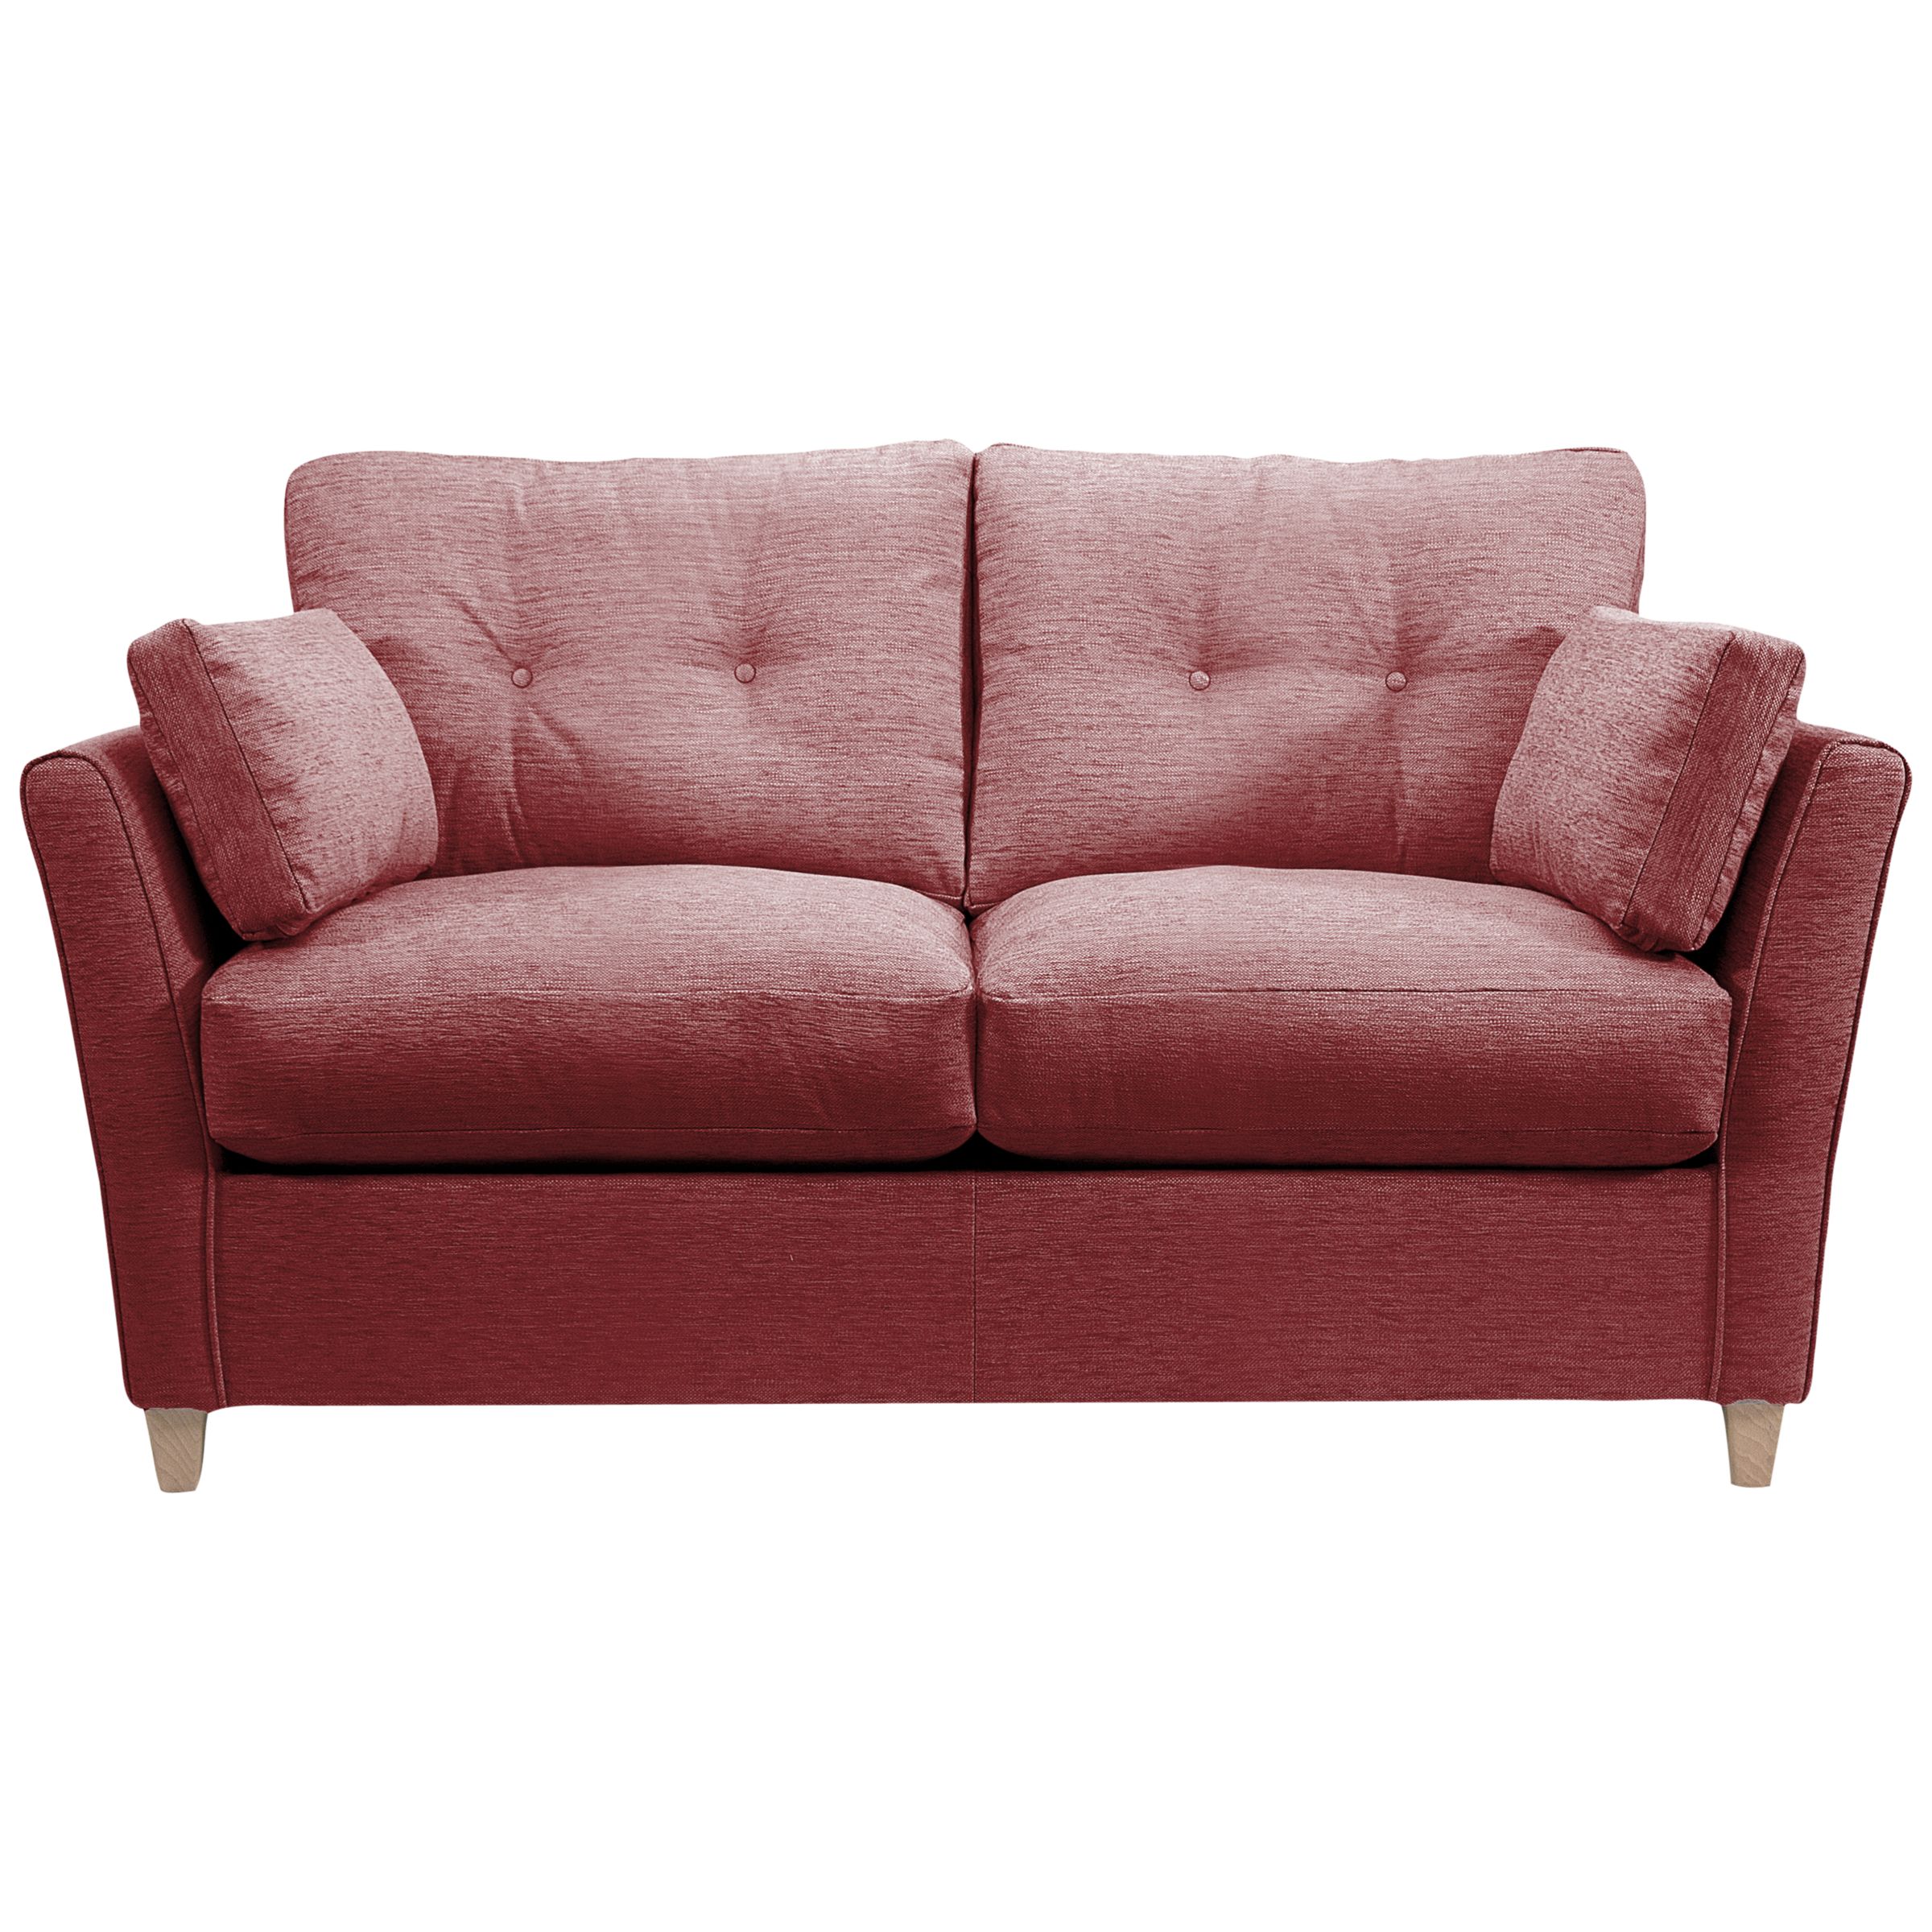 John Lewis Chopin Small Sofa, Scarlet, width 164cm